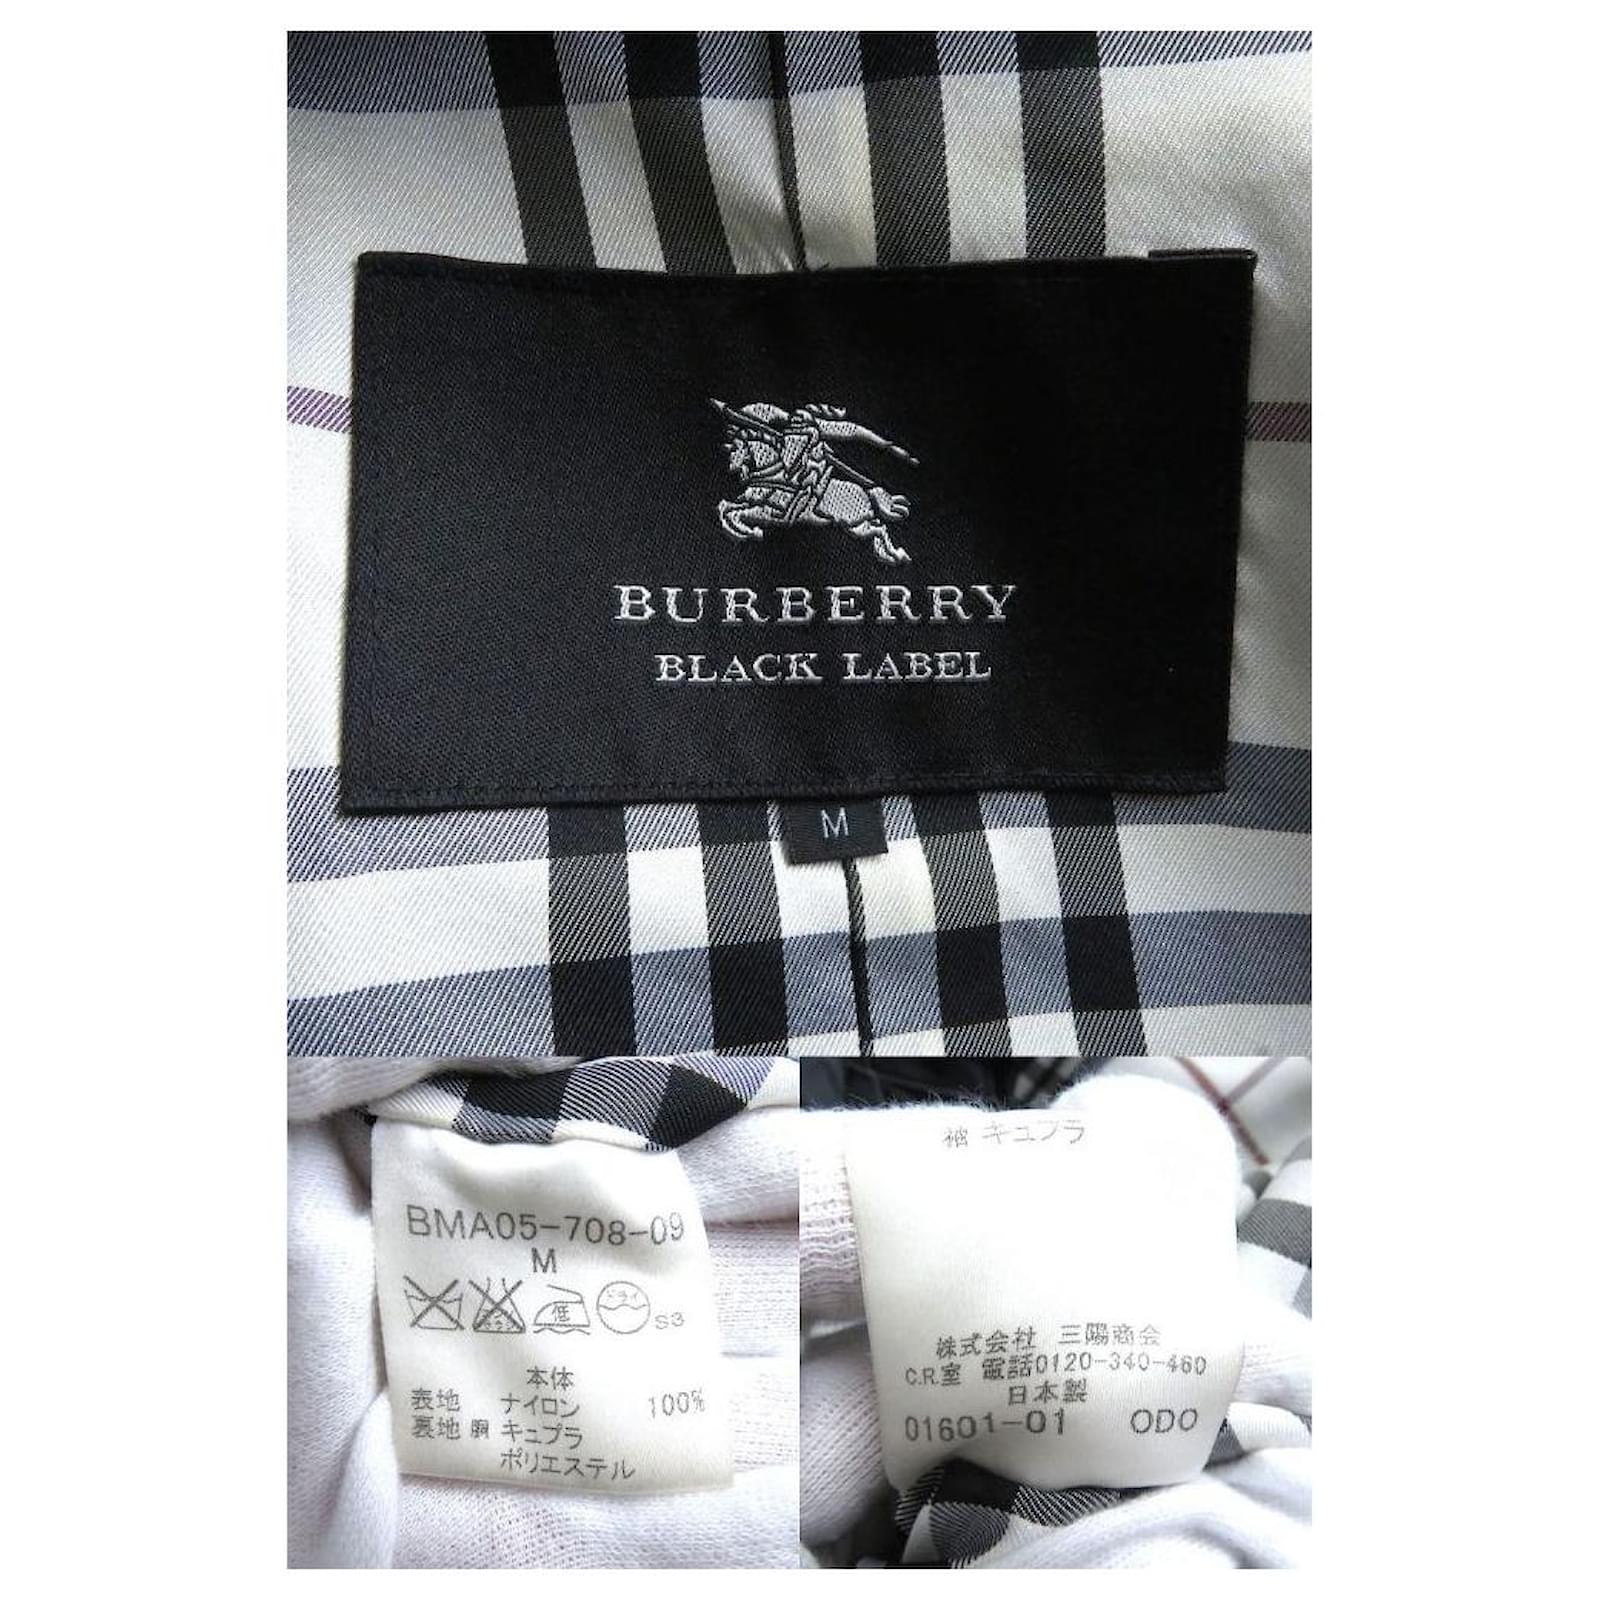 Used] Genuine △ BURBERRY BLACKLABEL Burberry black label batting 